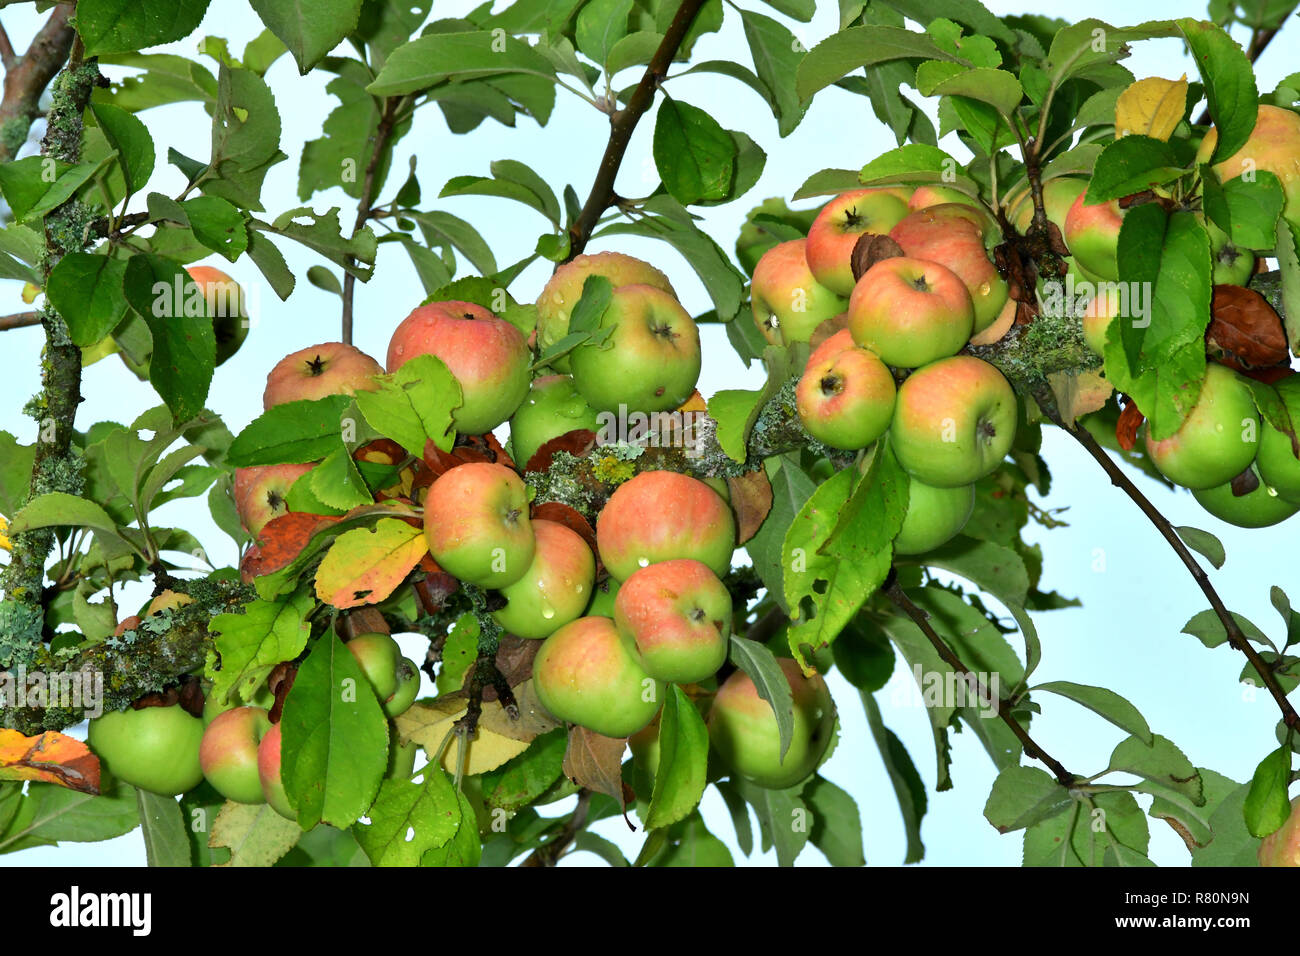 Common Crab Apple, Wild Crab Apple (Malus sylvestris). Ripe apples on a tree. Germany Stock Photo